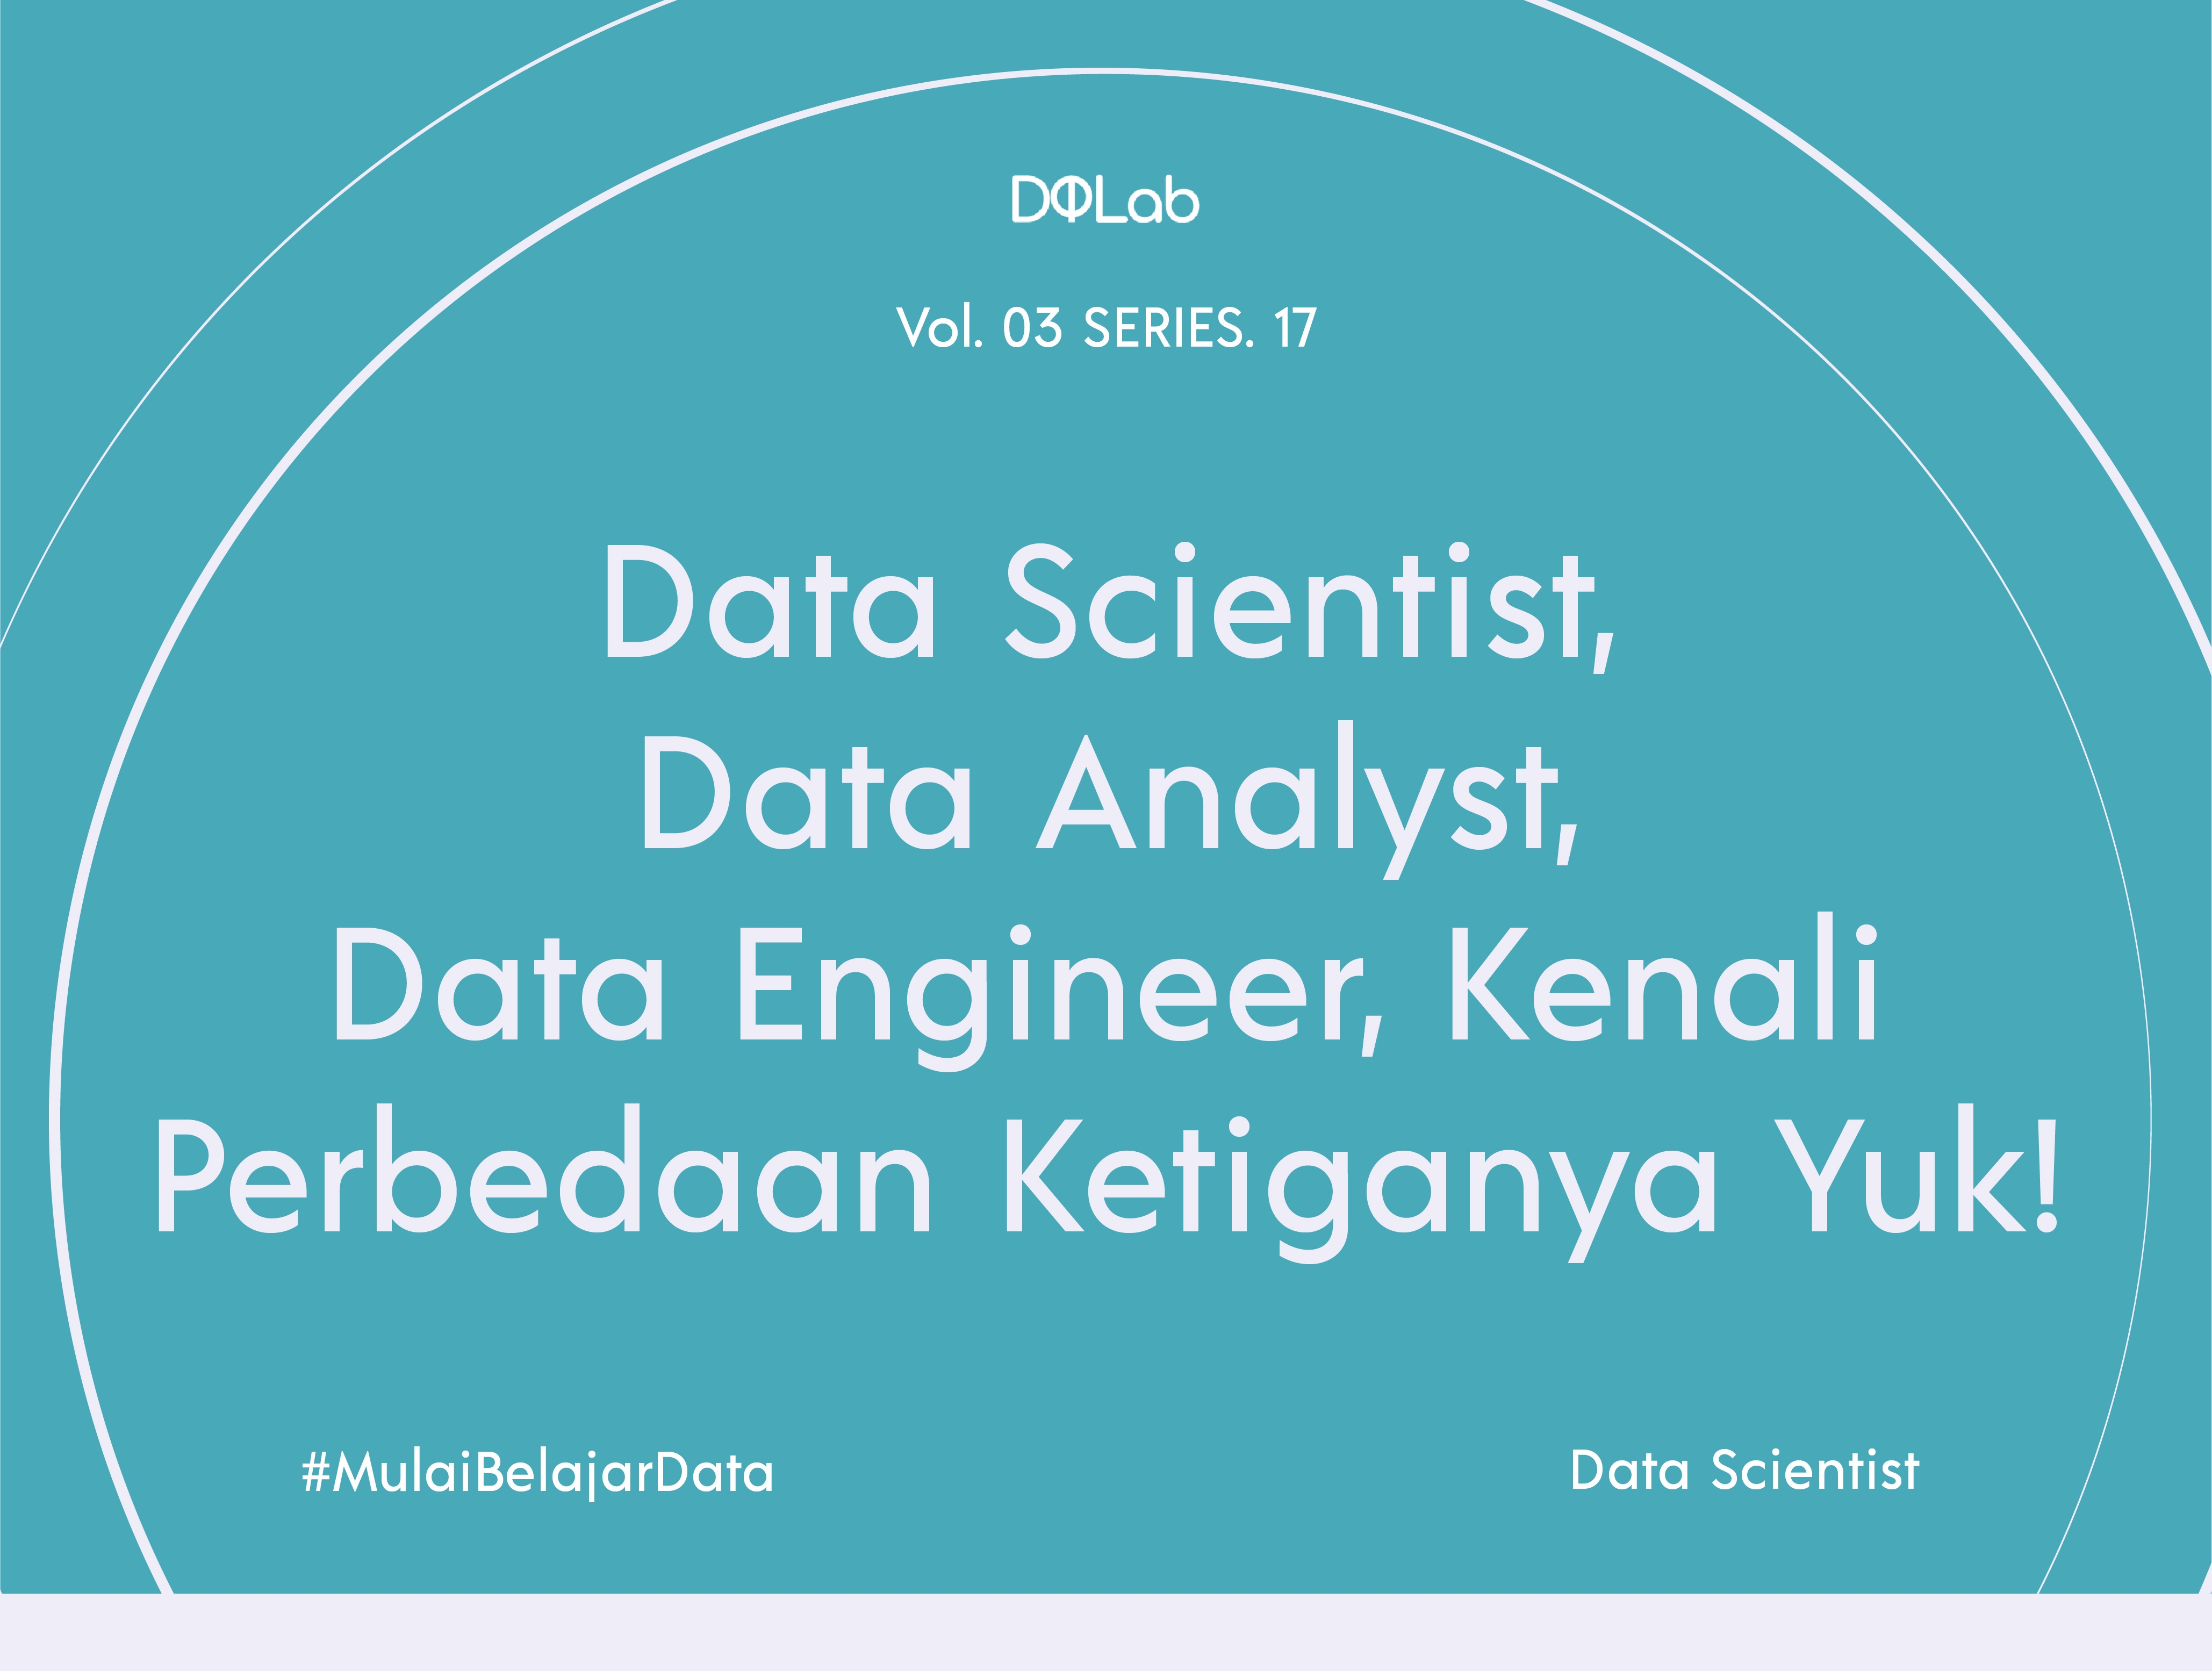 Ketahui Perbedaan Data Scientist Data Analyst Dan Data Eng